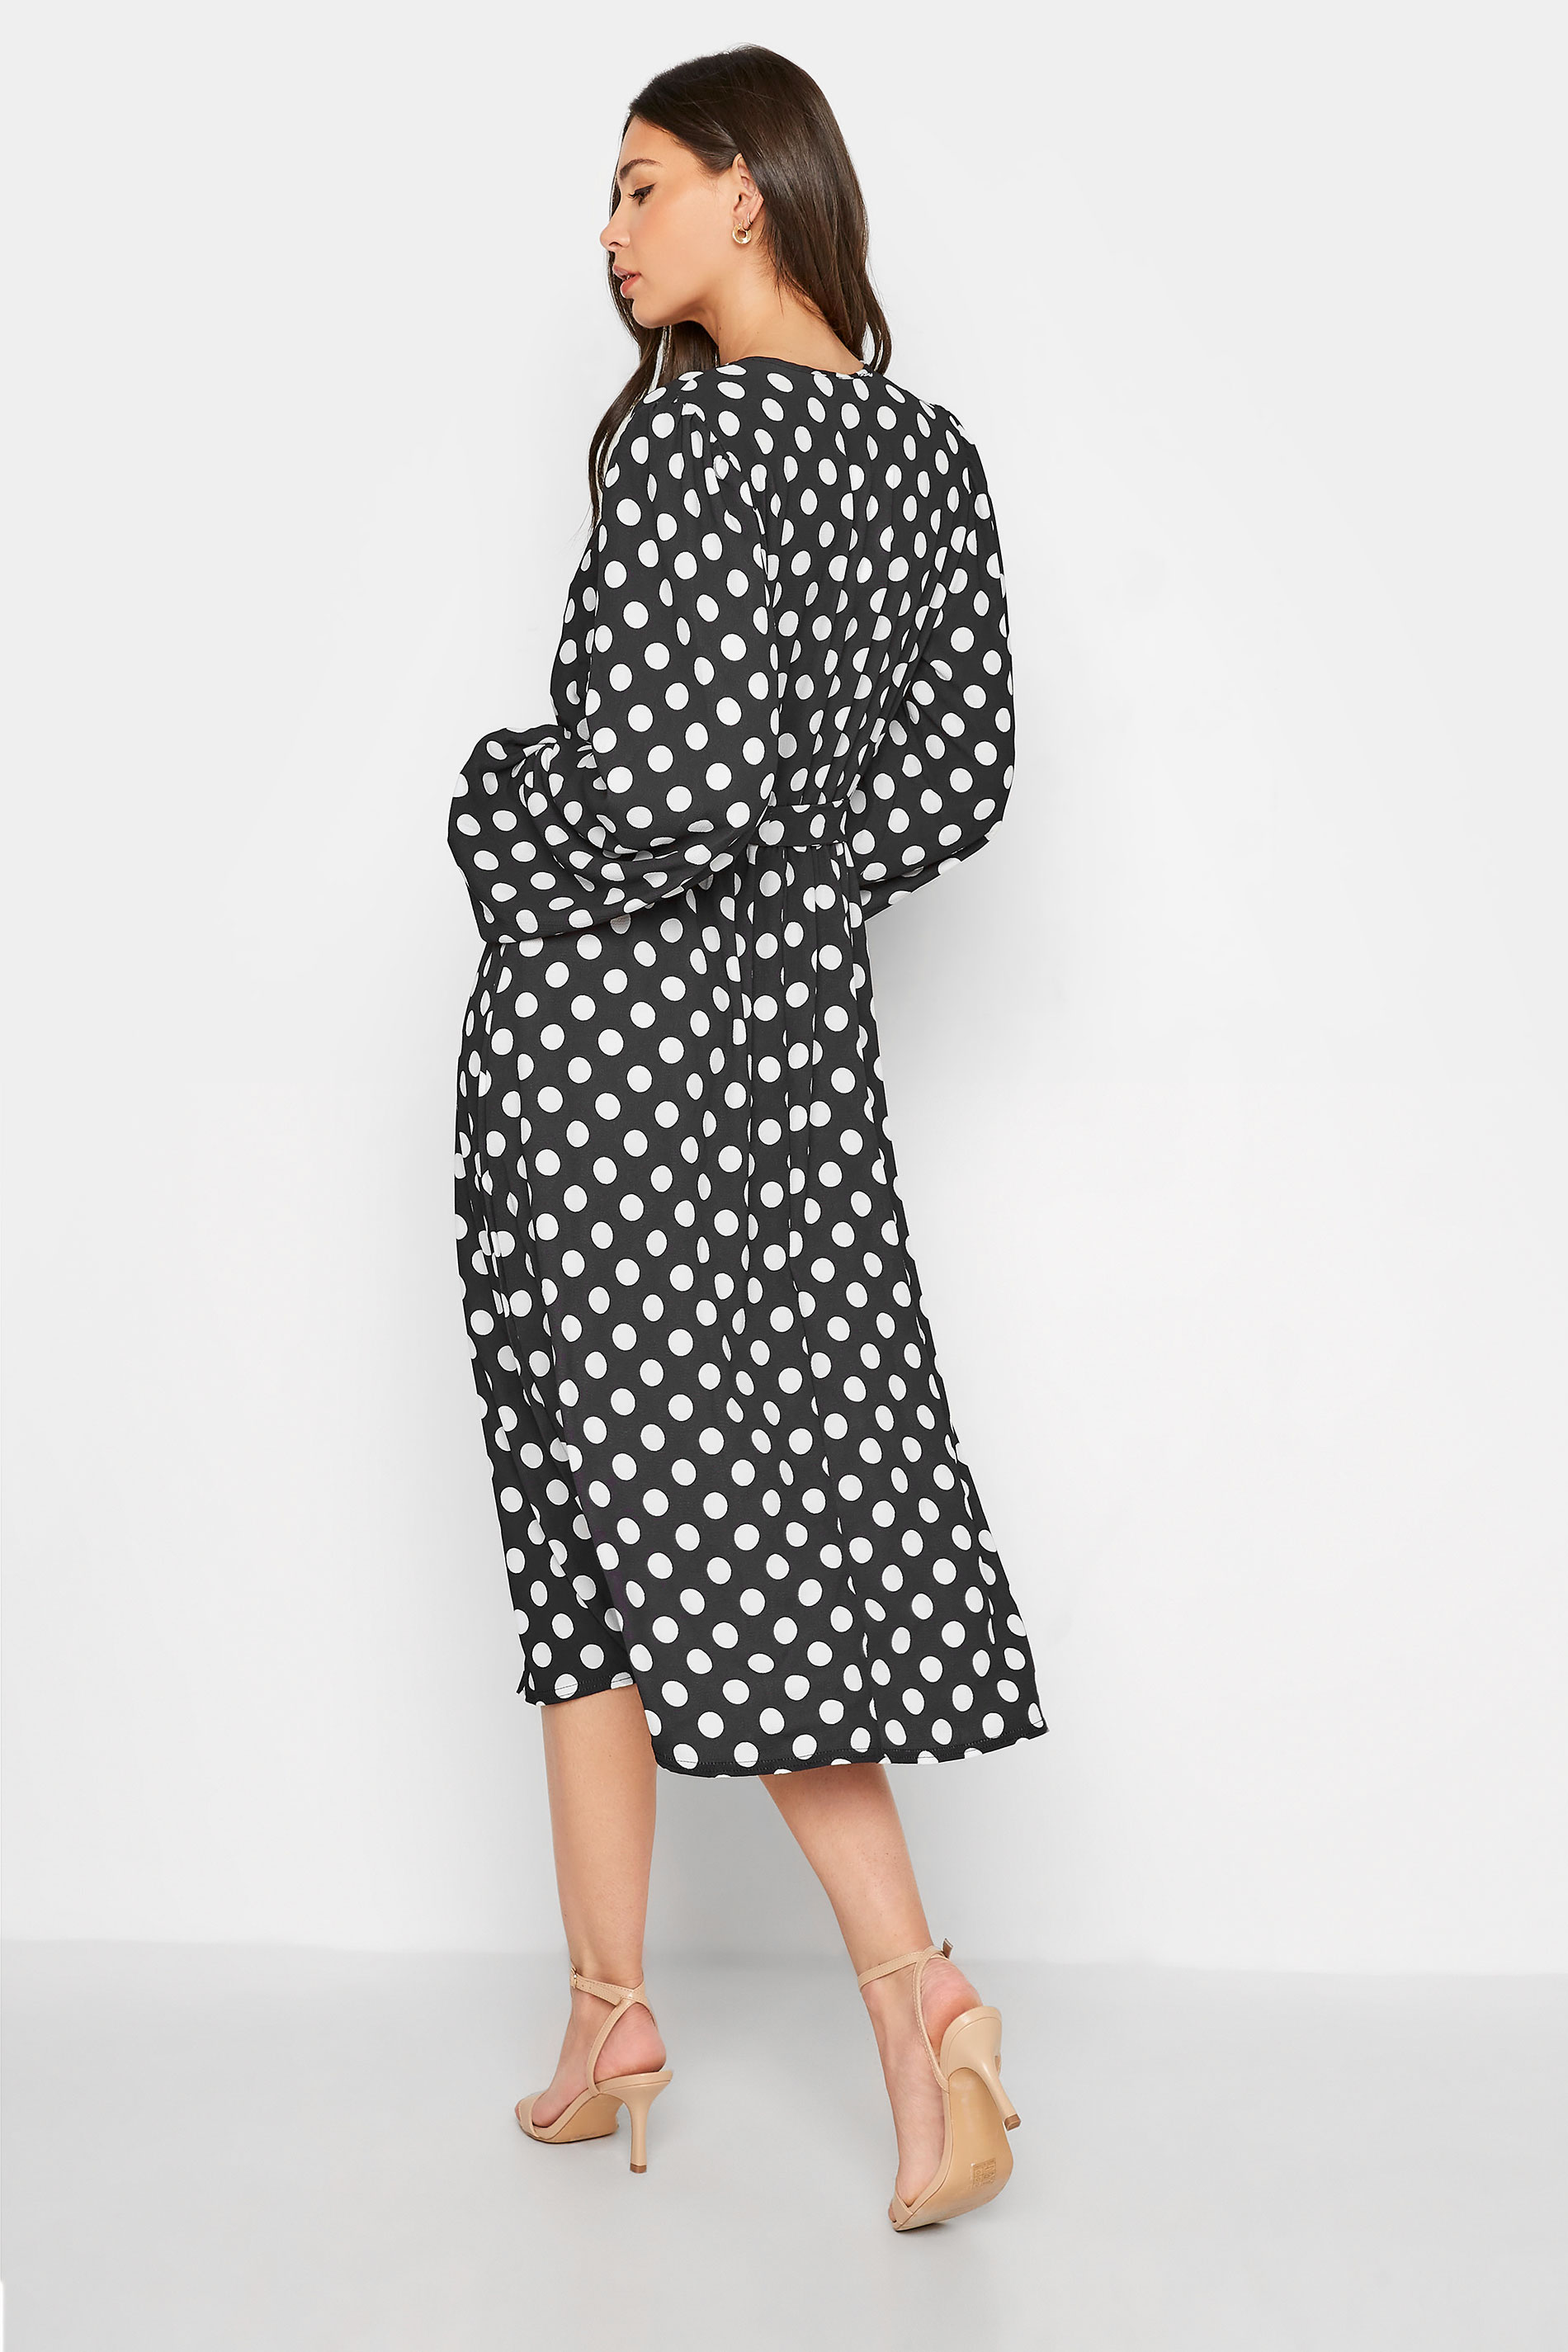 Tall Women's LTS Black Polka Dot Wrap Dress | Long Tall Sally 3